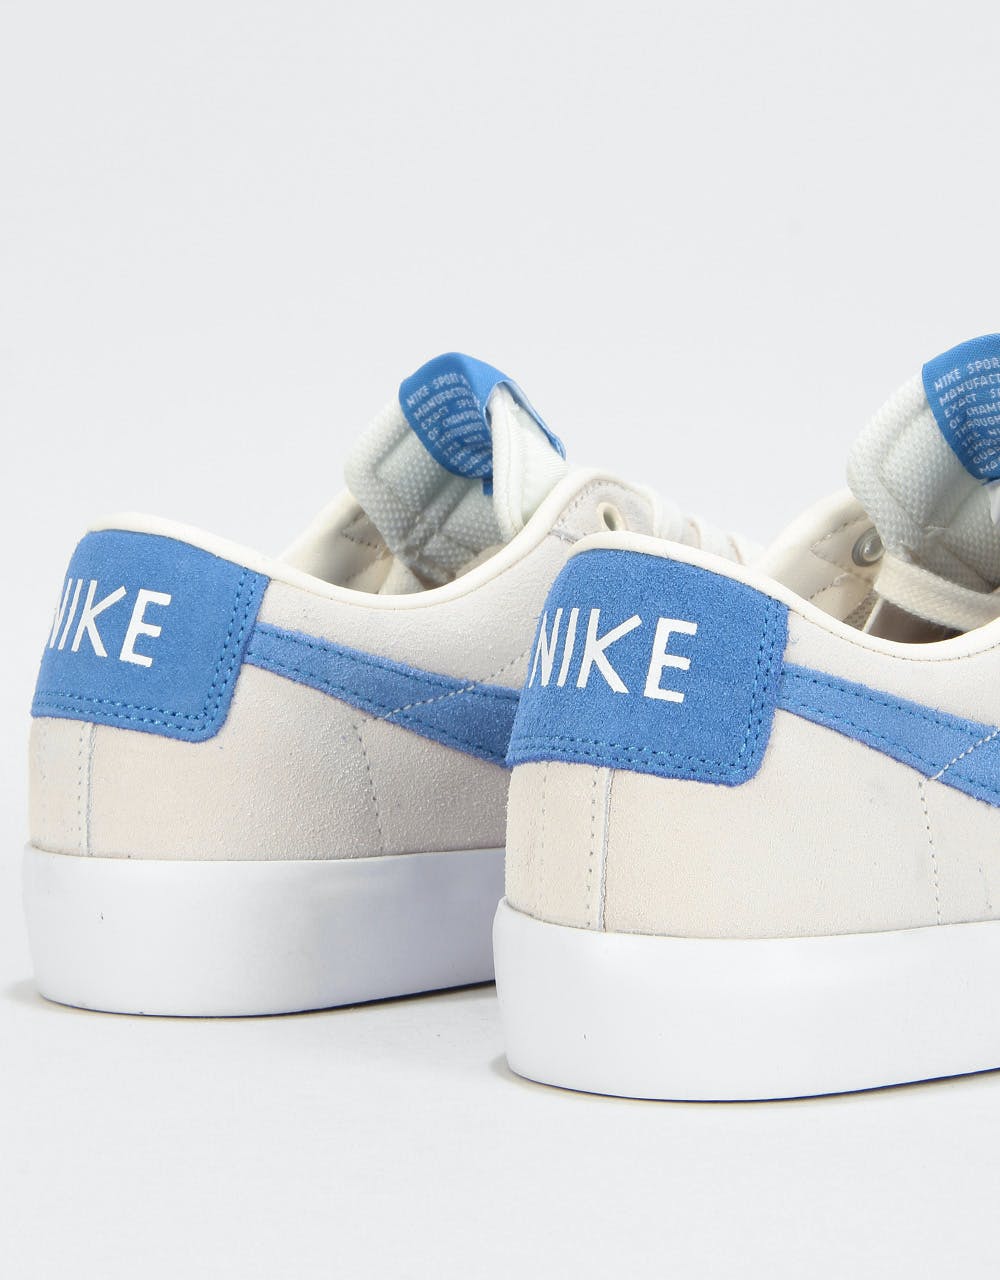 Nike SB Blazer Low GT Skate Shoes - Pale Ivory/Pacific Blue-White